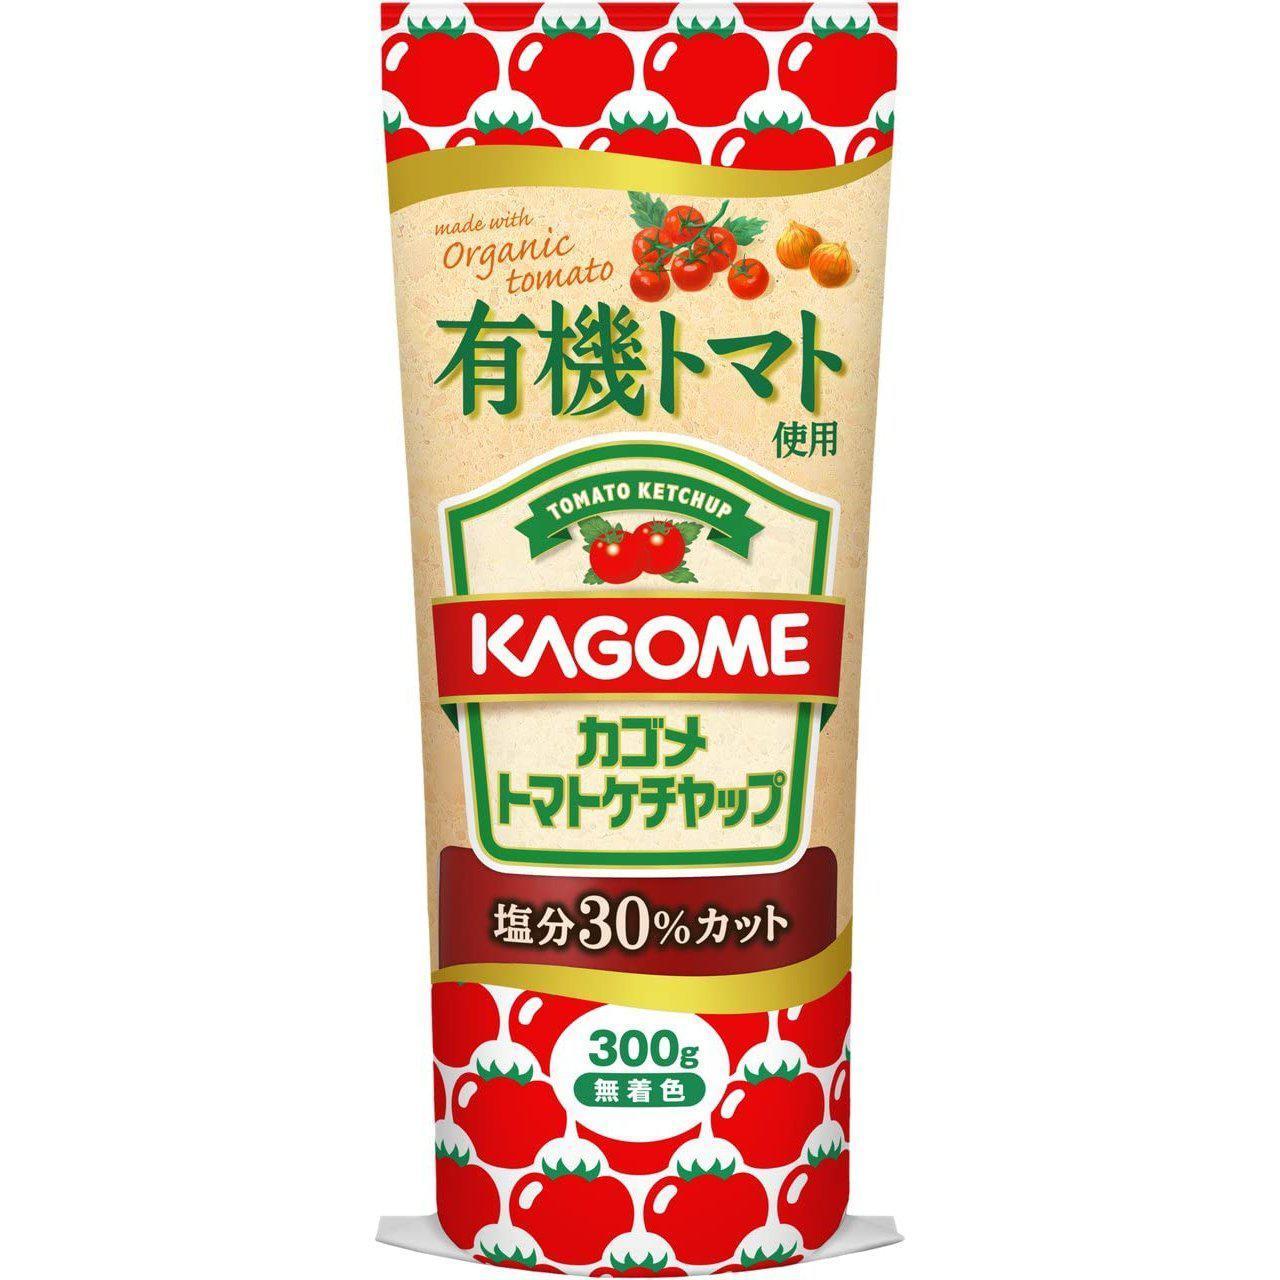 Kagome Low Sodium Japanese Organic Ketchup 300g, Japanese Taste